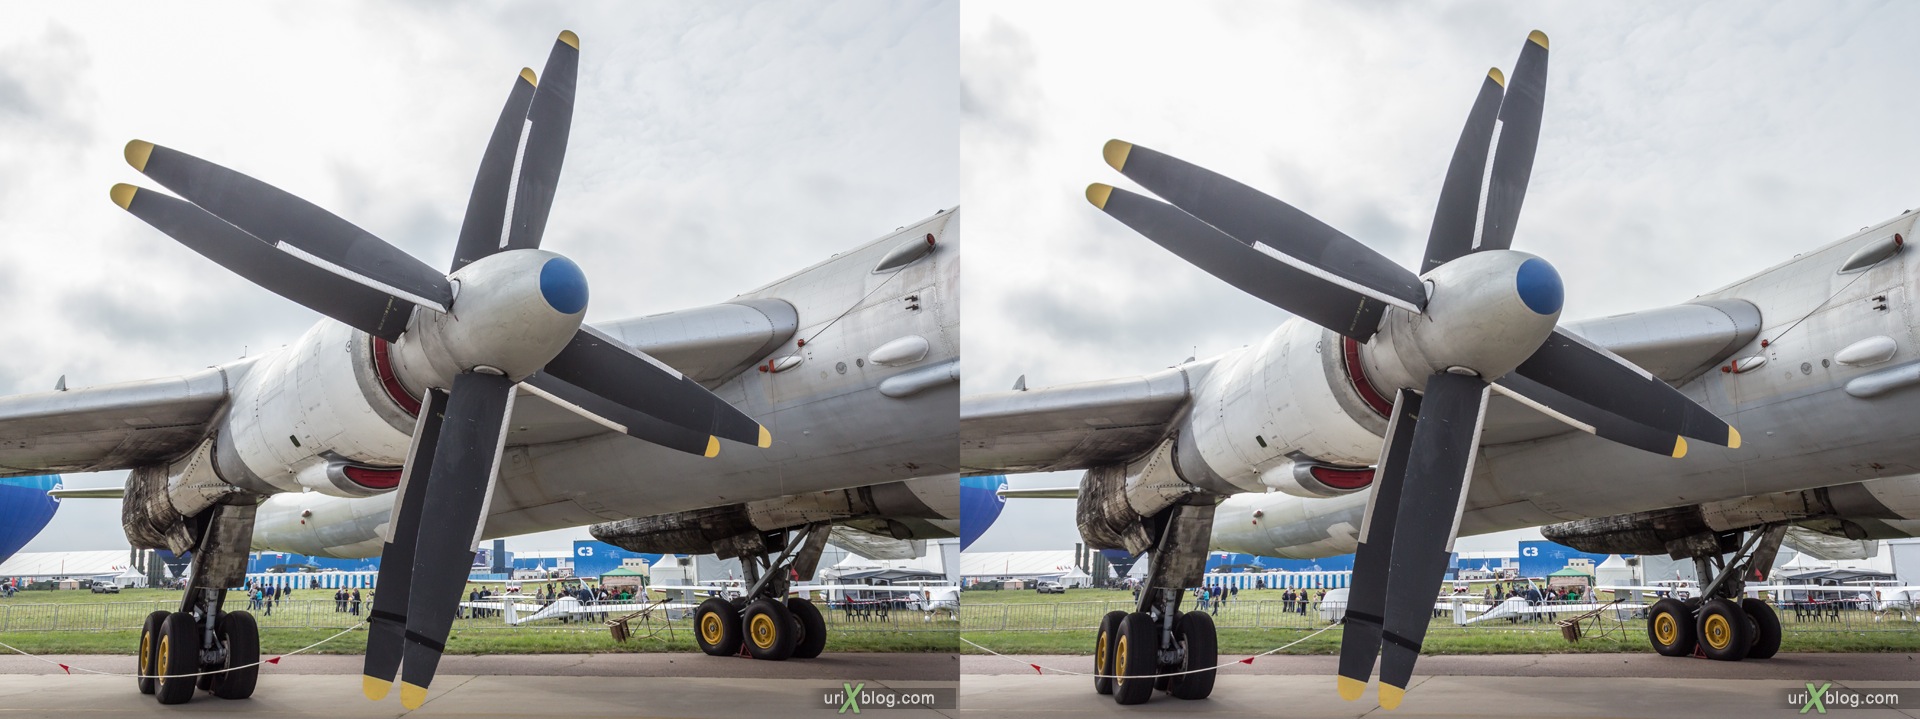 2013, Tu-95SM, MAKS, International Aviation and Space Salon, Russia, Soviet, USSR, Ramenskoye airfield, airplane, 3D, stereo pair, cross-eyed, crossview, cross view stereo pair, stereoscopic